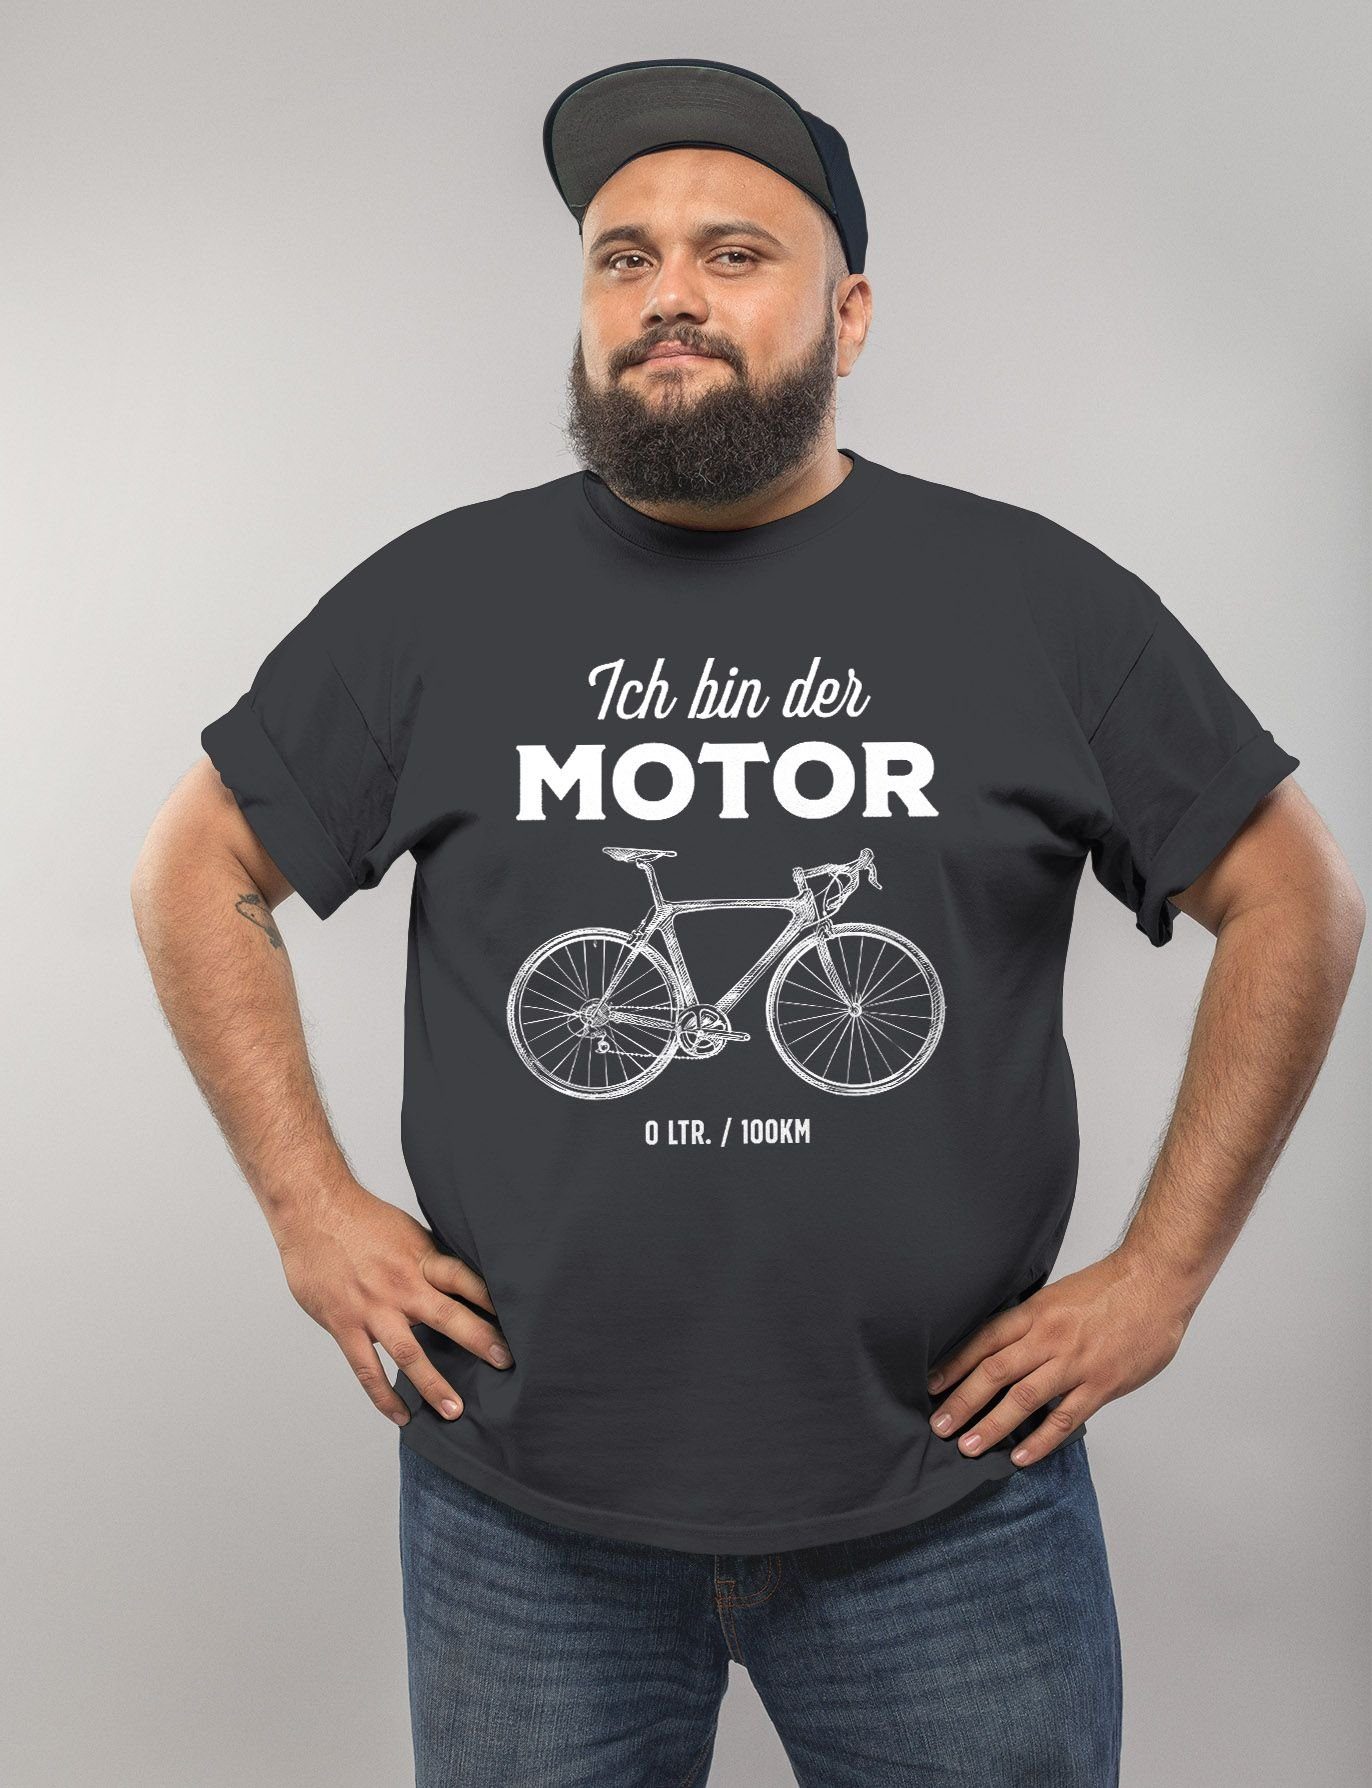 T-Shirt lustig Rad MoonWorks Print I'm Moonworks® Print-Shirt grau the Fun-Shirt Fahrrad Motor Sprüche Engine Herren Bike mit Spruch